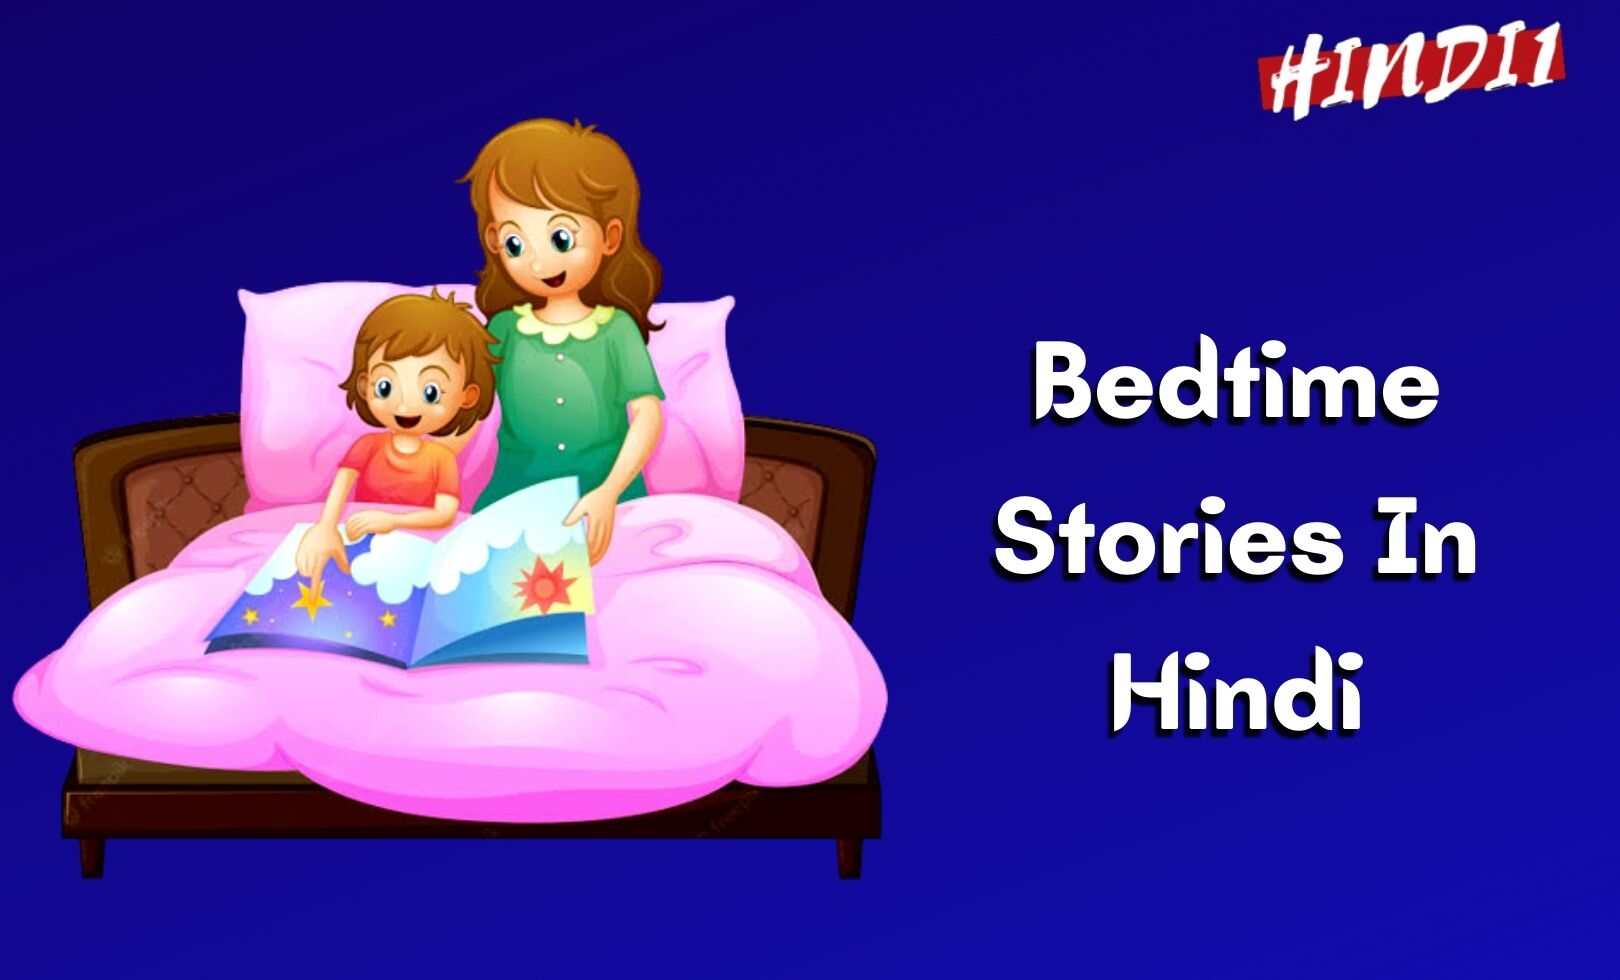 Bedtime Stories In Hindi